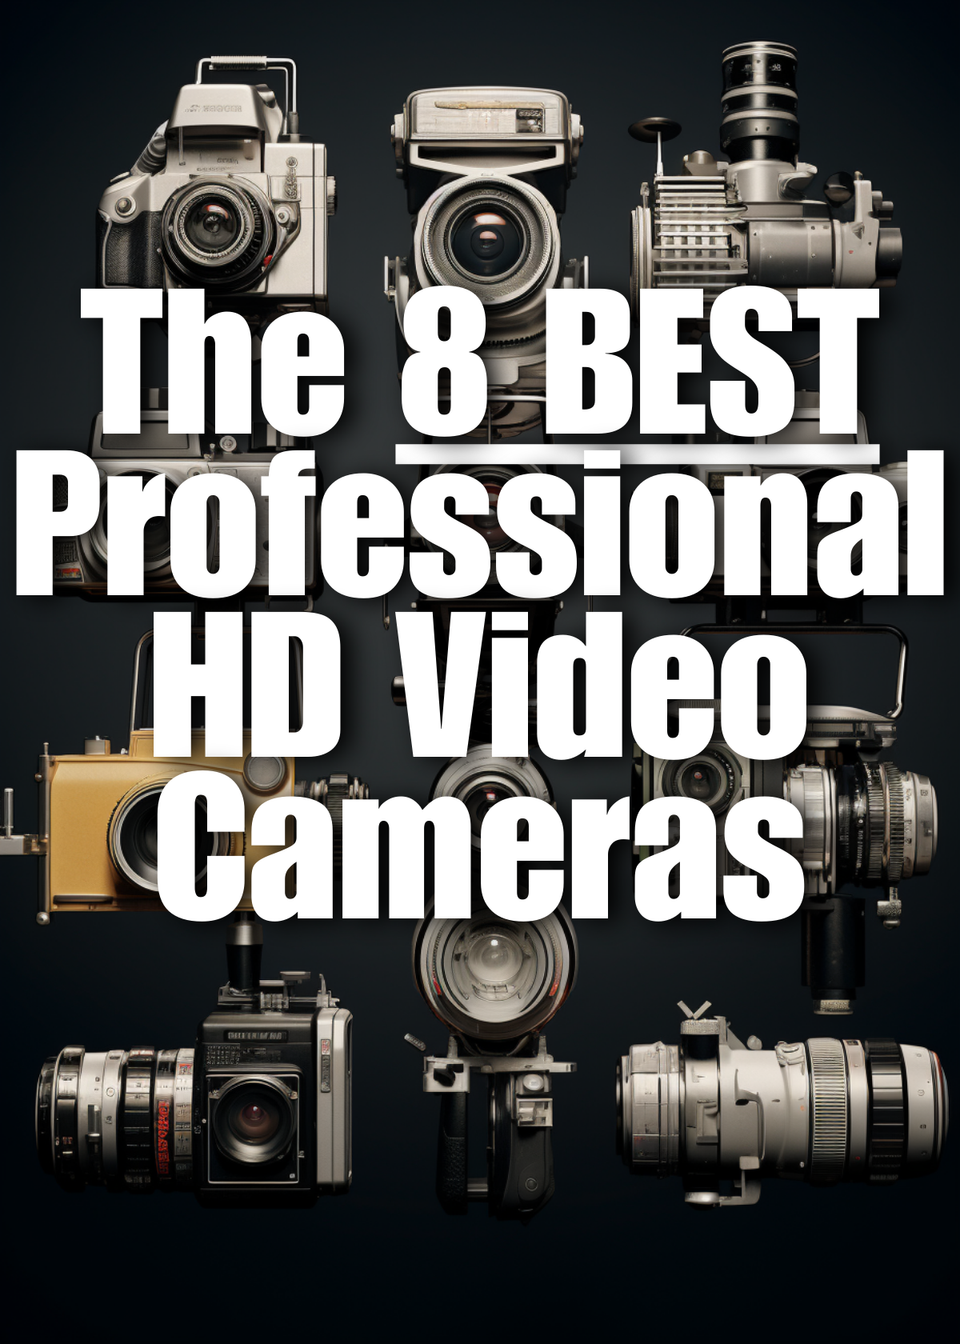 Professional HD Video Cameras